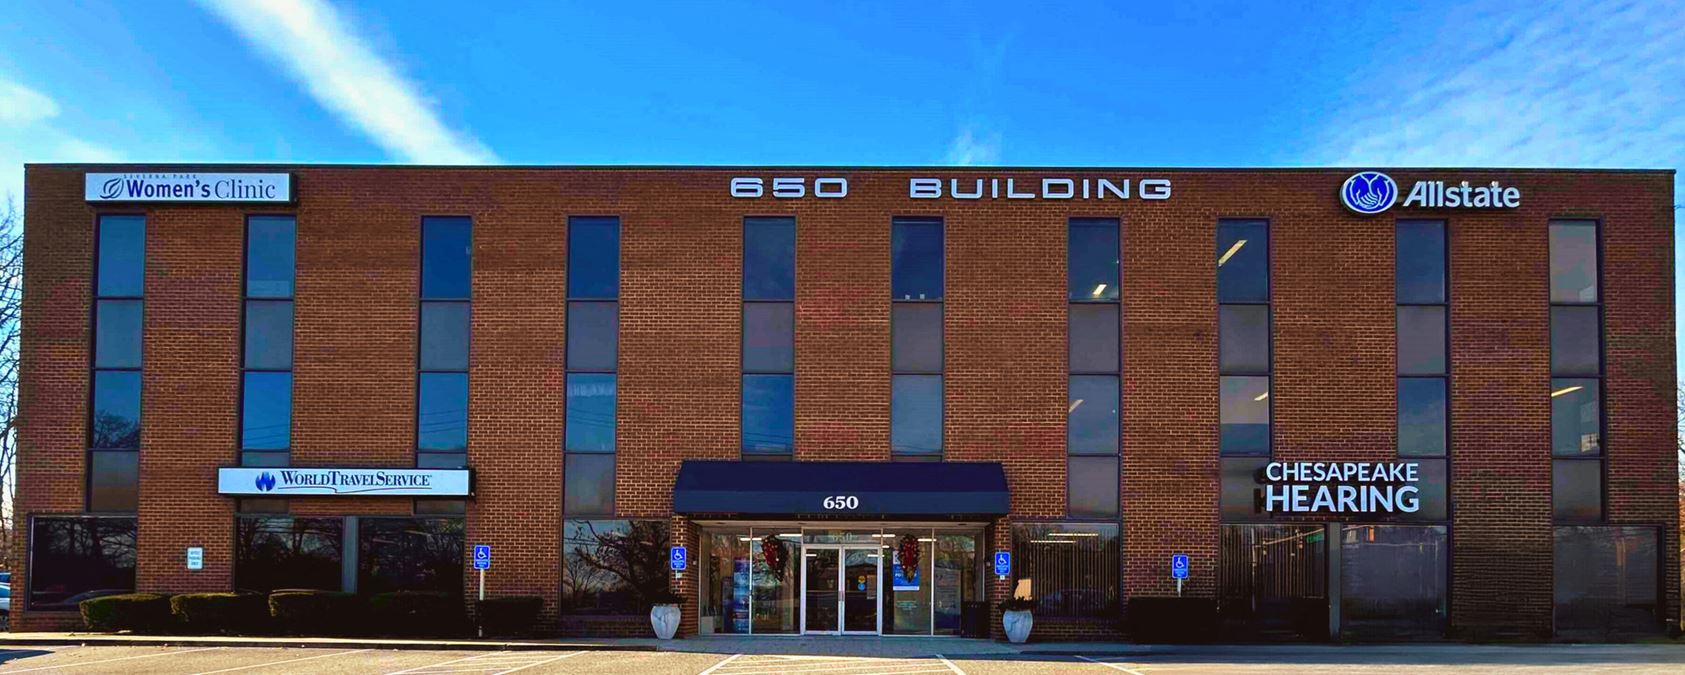 650 Building